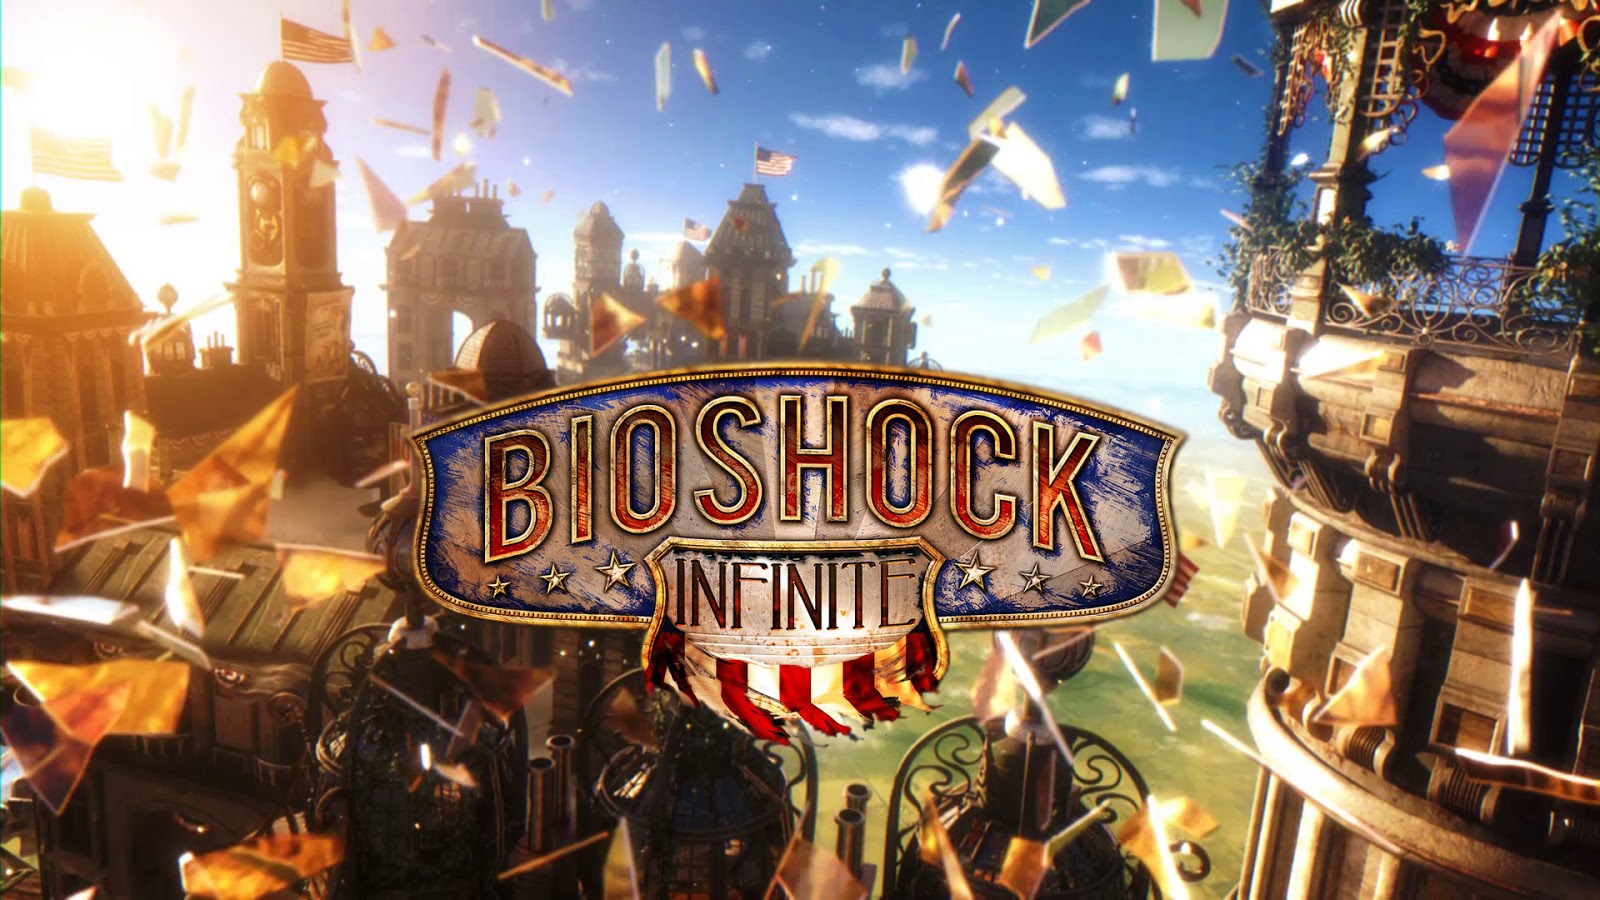  BioShock: Infinite وهي من أفضل ألعاب الكمبيوتر